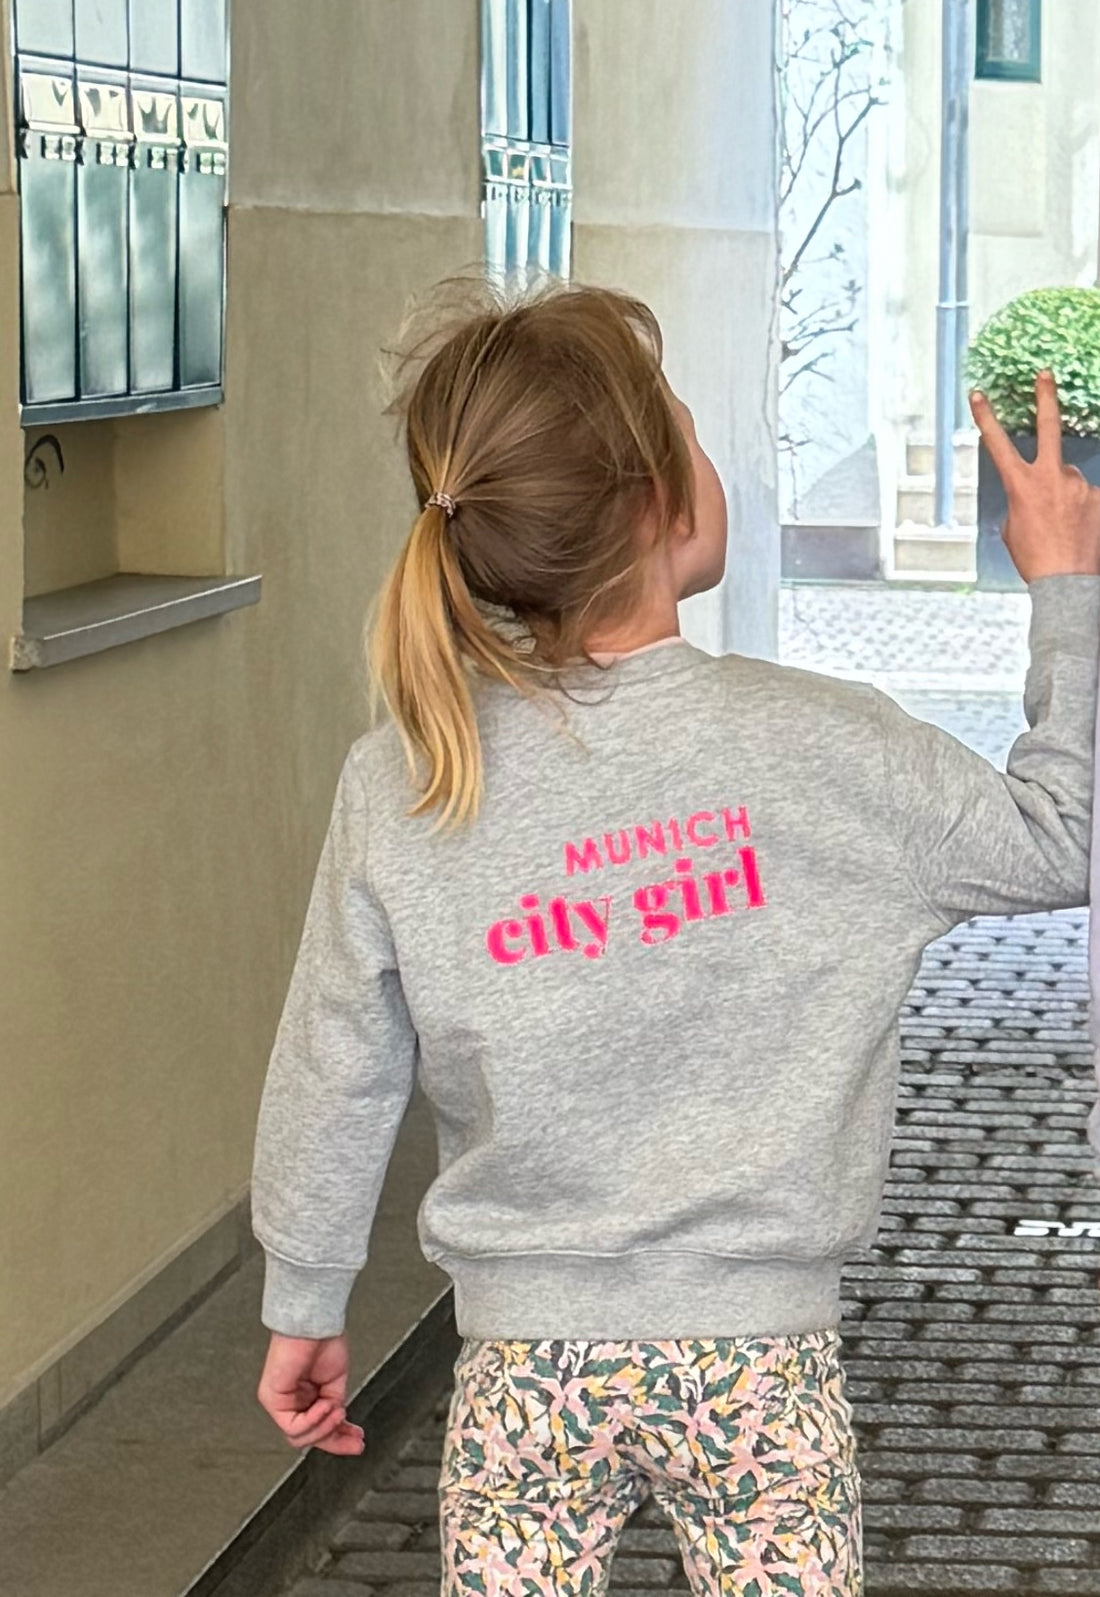 AURYN - Mädchen Sweatshirt grau Munich city girl pink